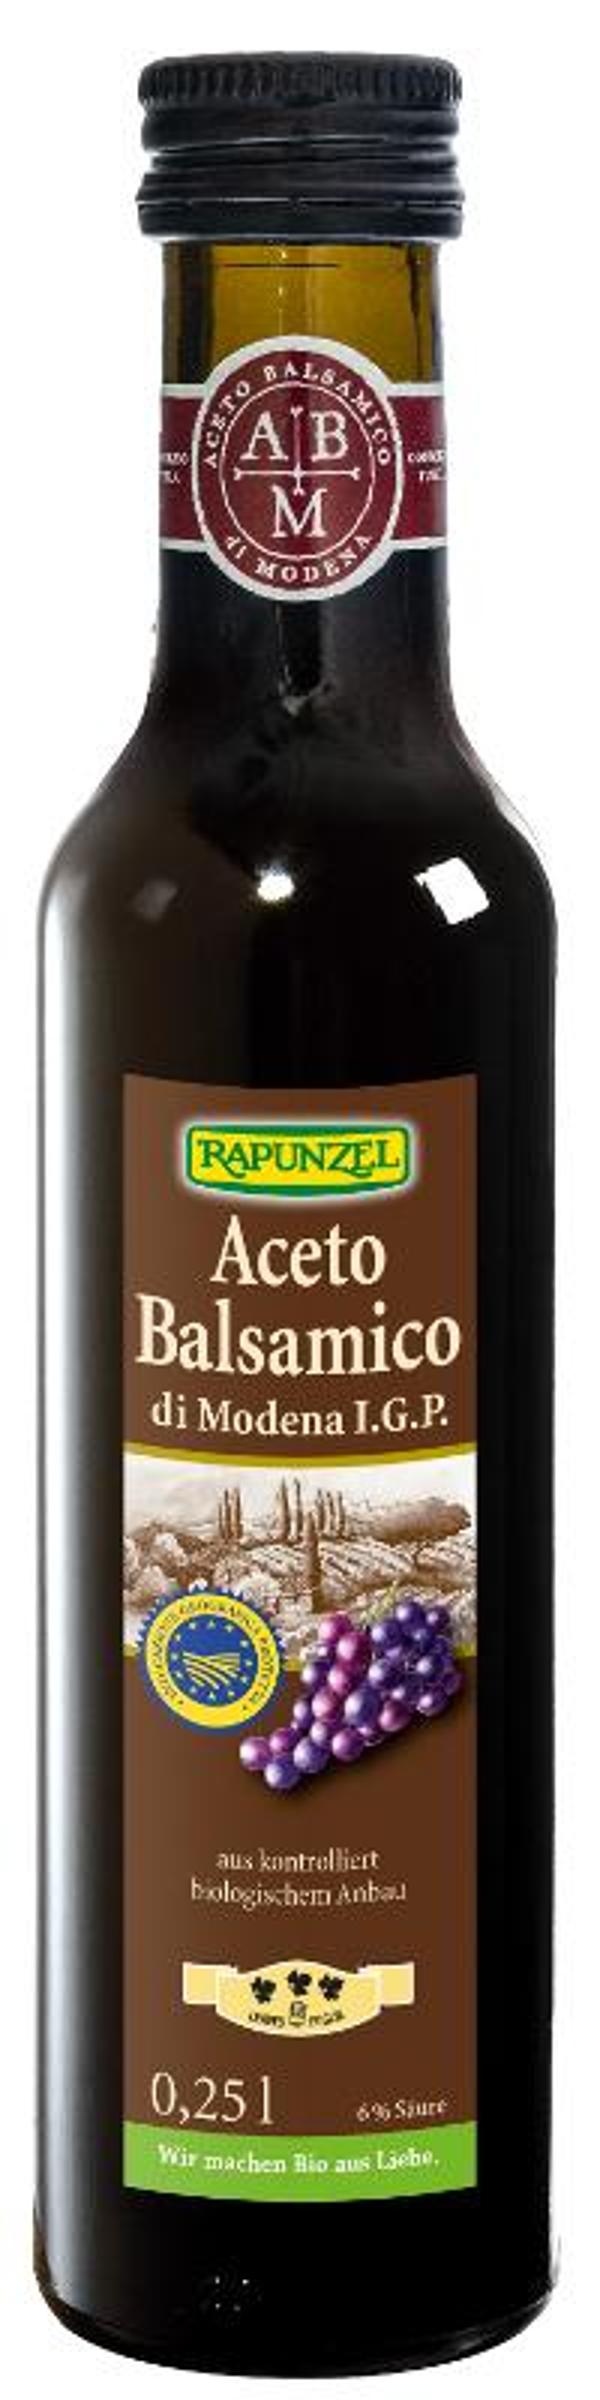 Produktfoto zu Aceto Balsamico di Modena I.G.P. speciale